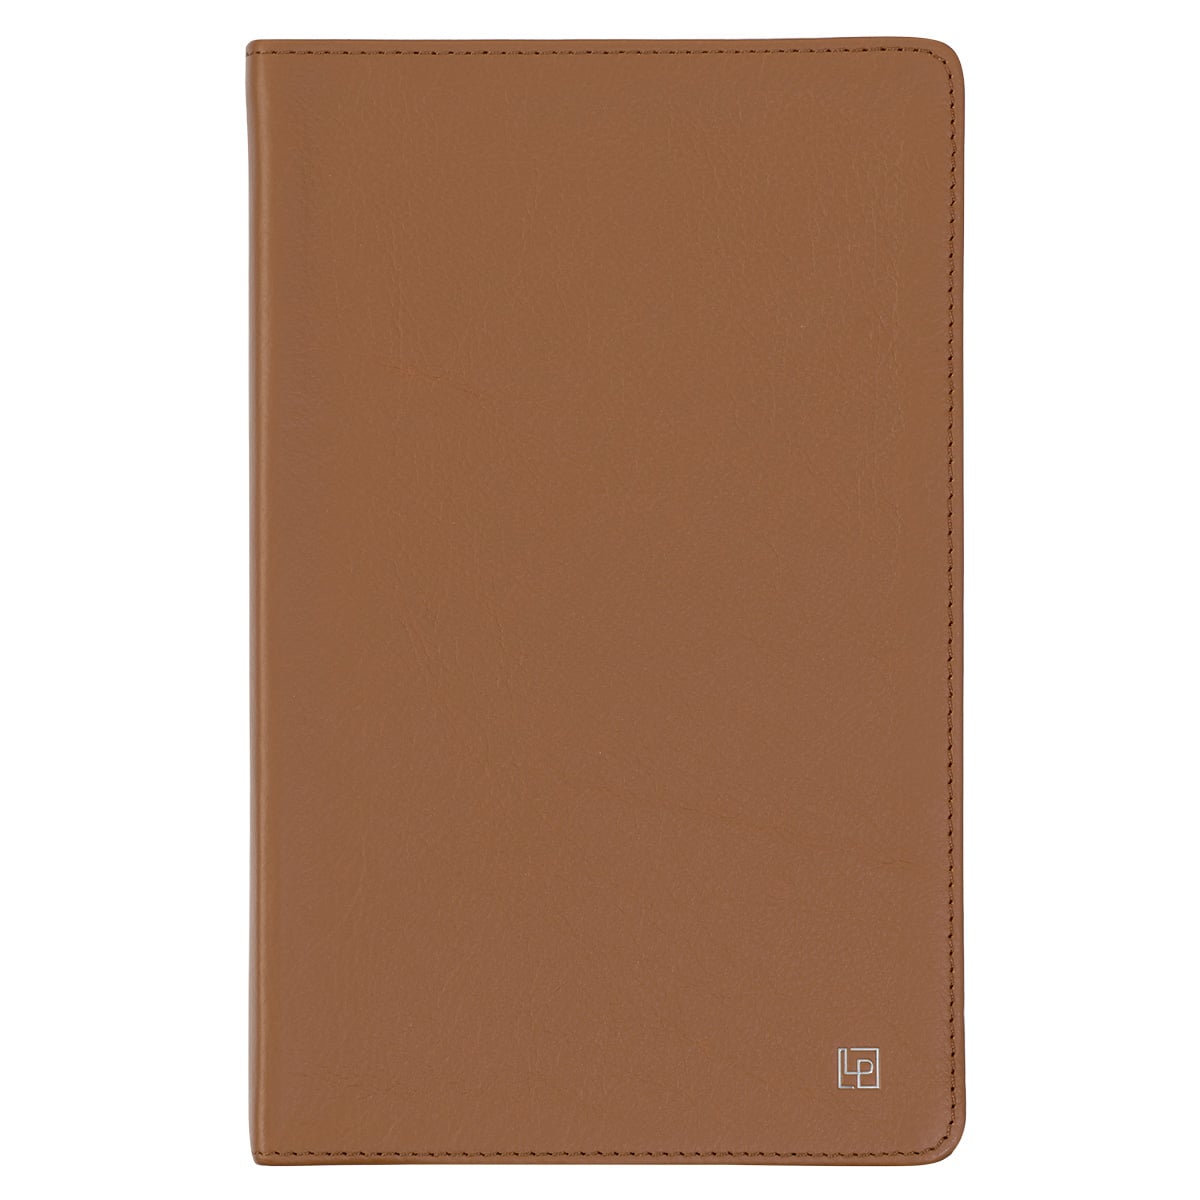 Biscotti Tan Leather Journal